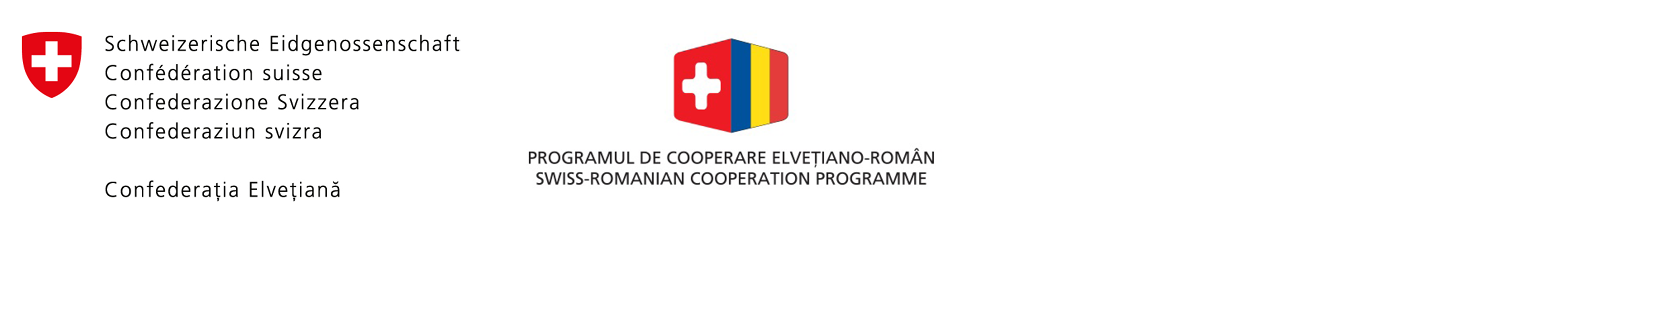 Logos Confédération suisse, Swiss-romanian cooperation program